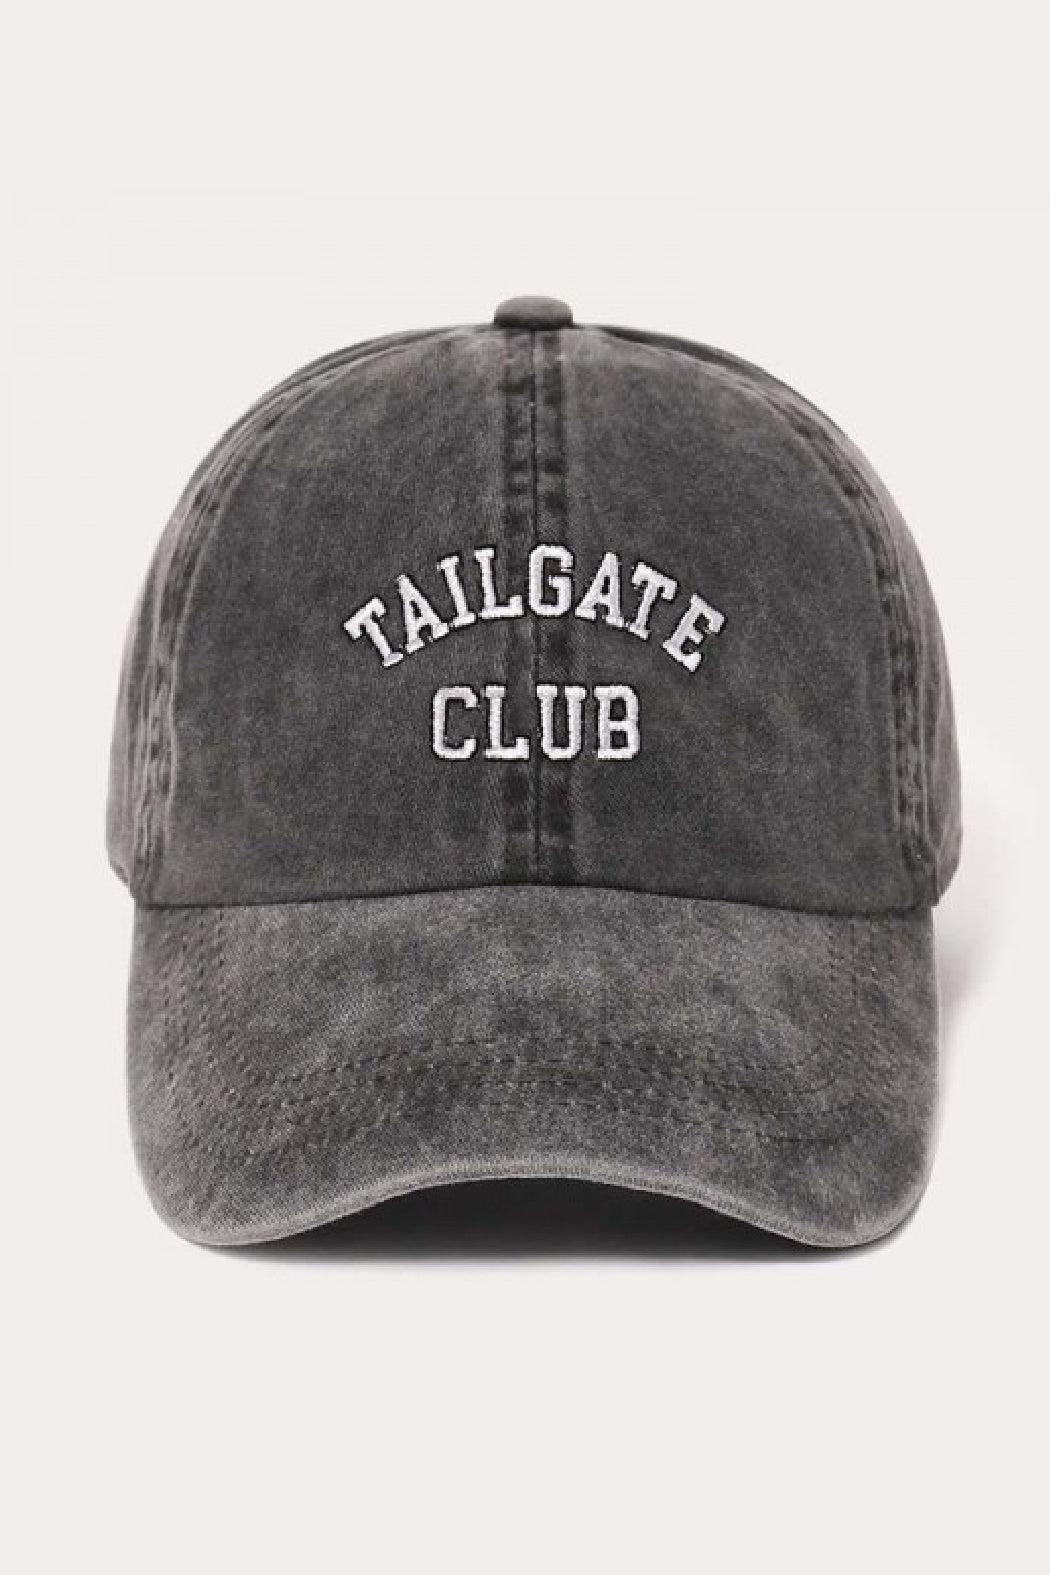 Tailgate Club Baseball Cap